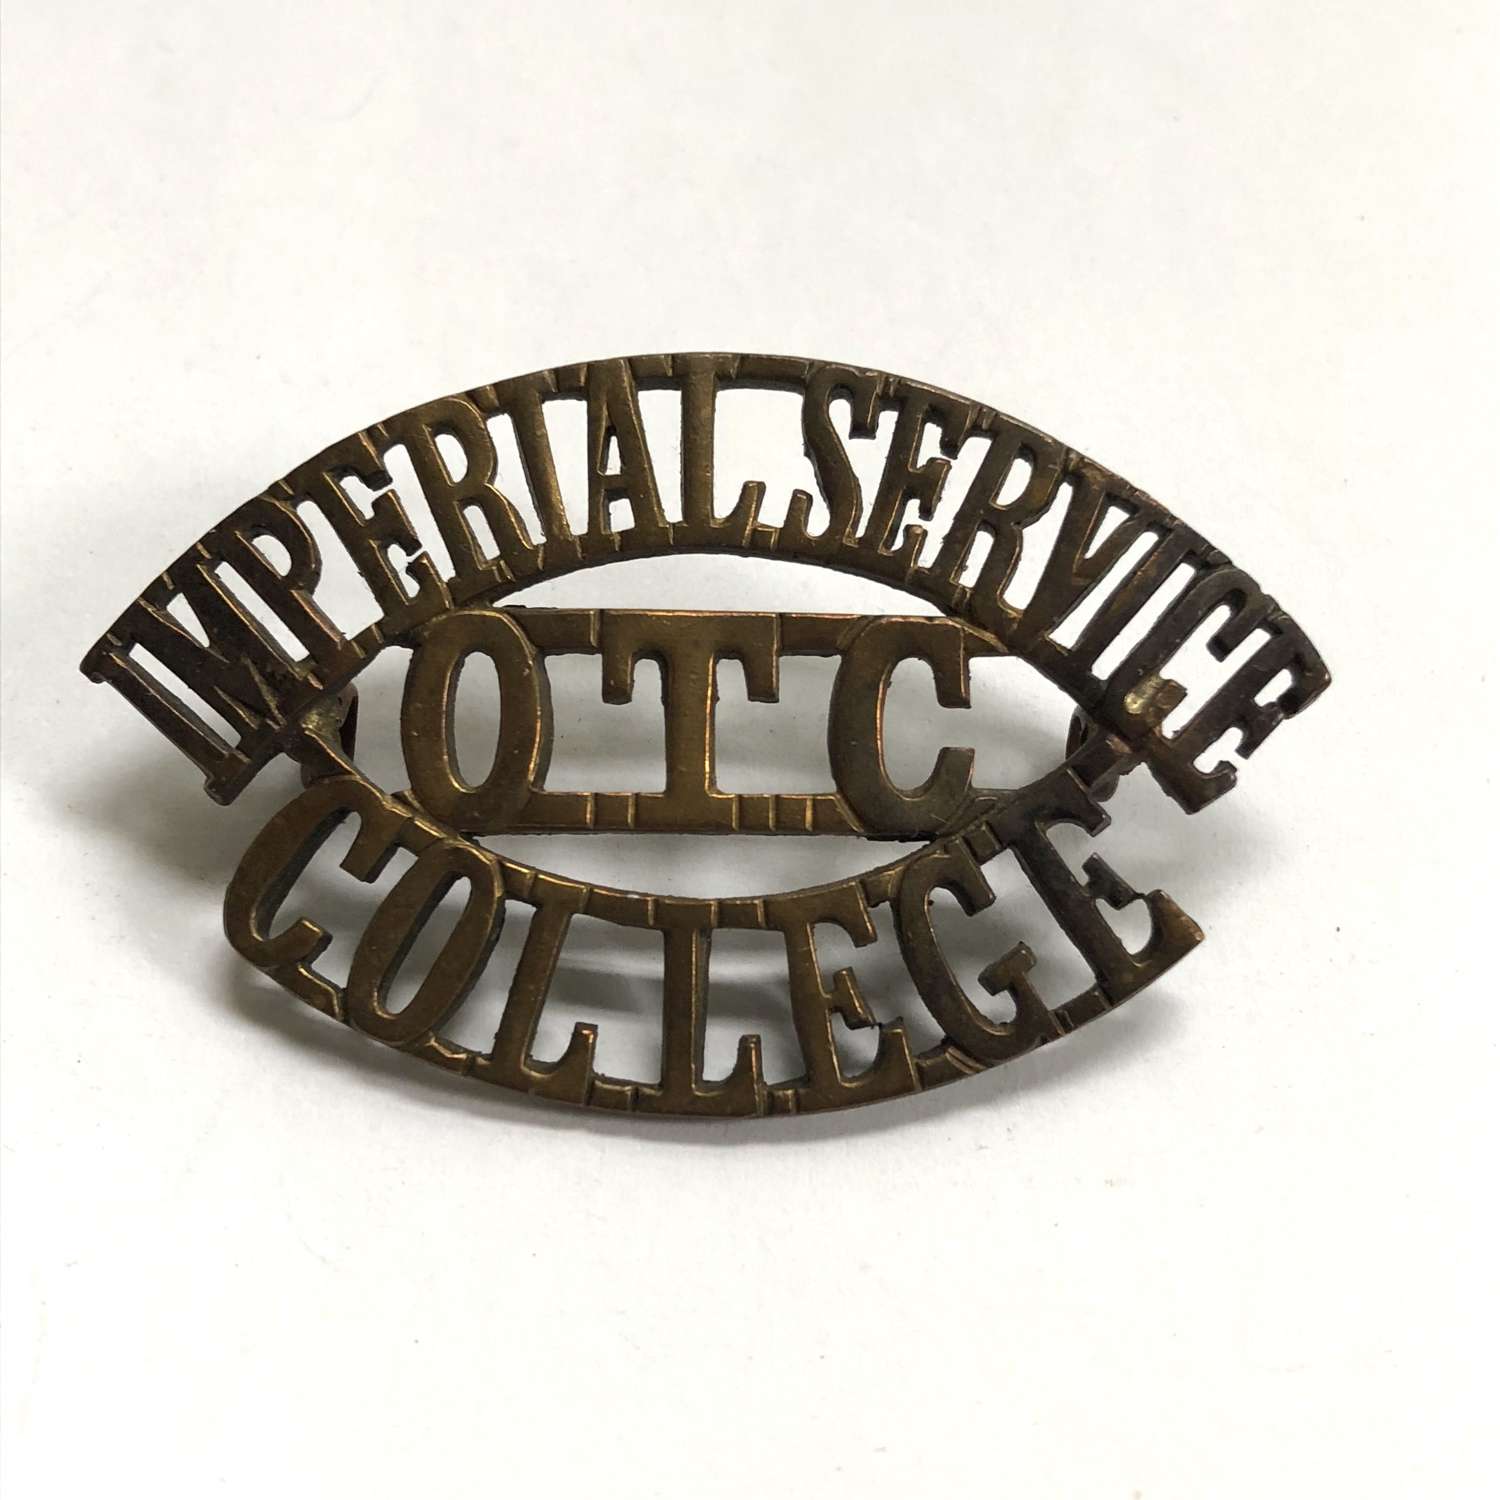 IMPERIAL SERVICE / OTC / COLLEGE shoulder title circa 1911-40